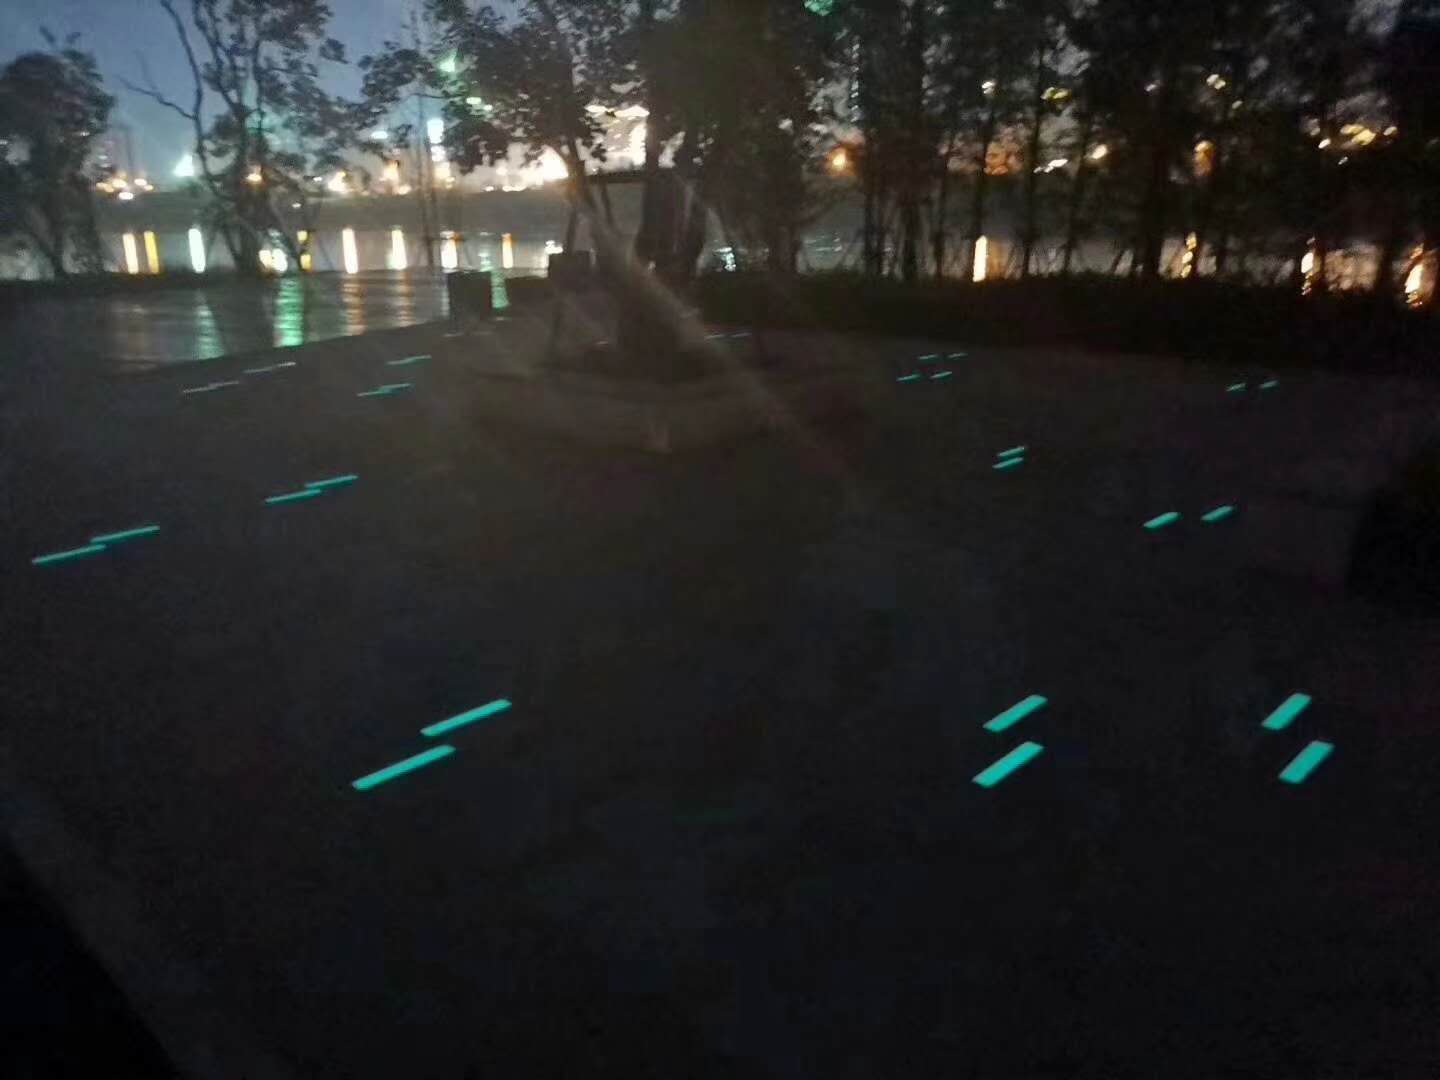 Luminous Ndicators Tiles for Blind Path Glowing in The Dark